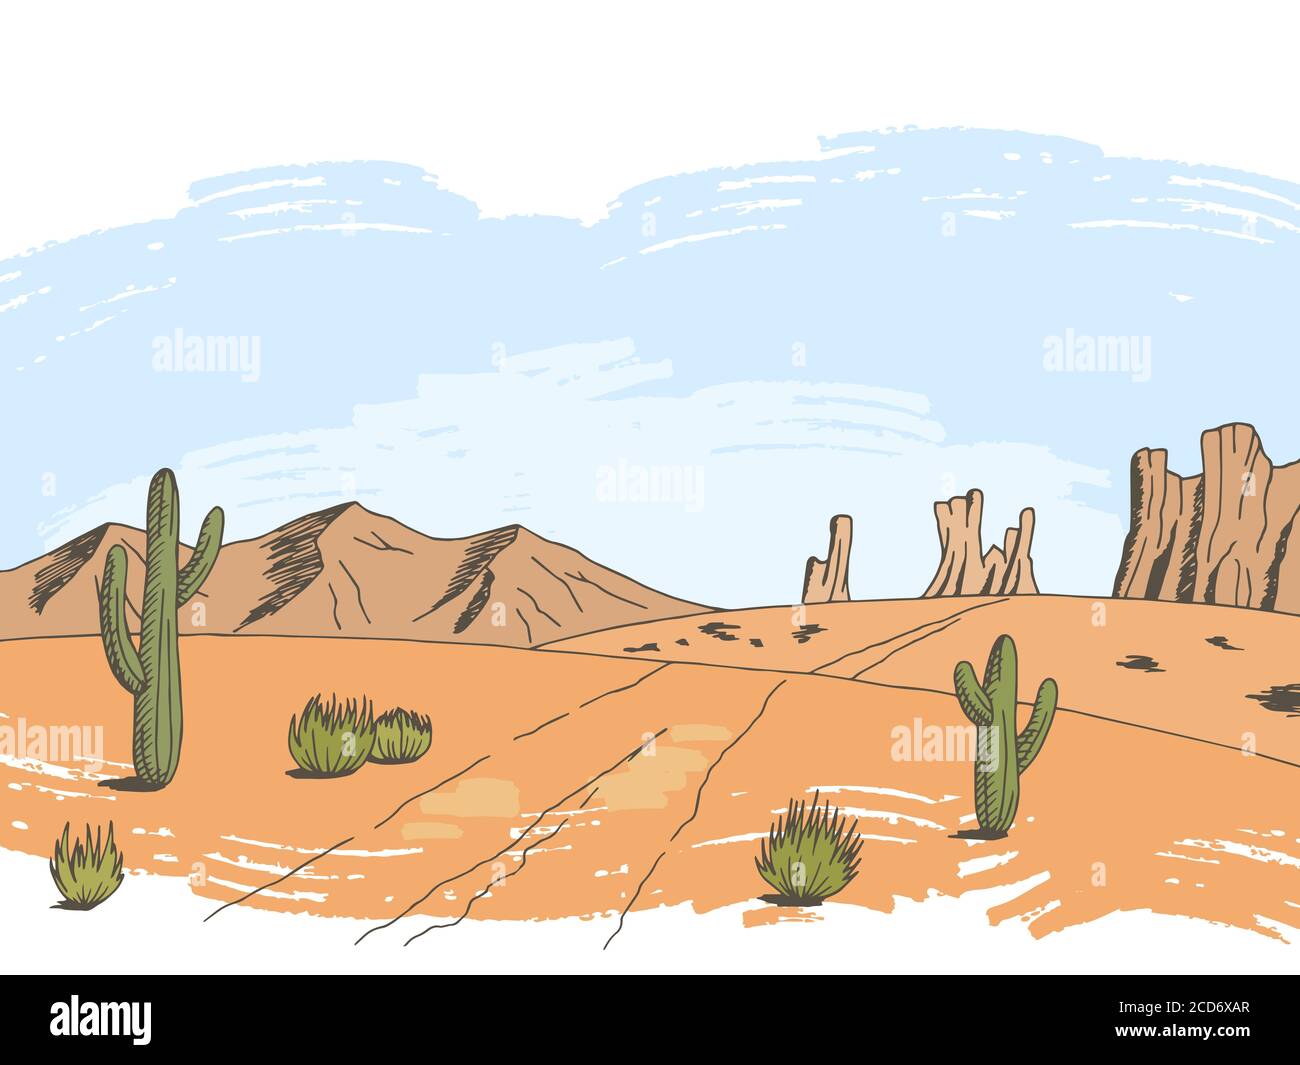 Prairie Straße Farbe Grafik amerikanische Wüste Skizze Landschaft Illustration Vektor Stock Vektor